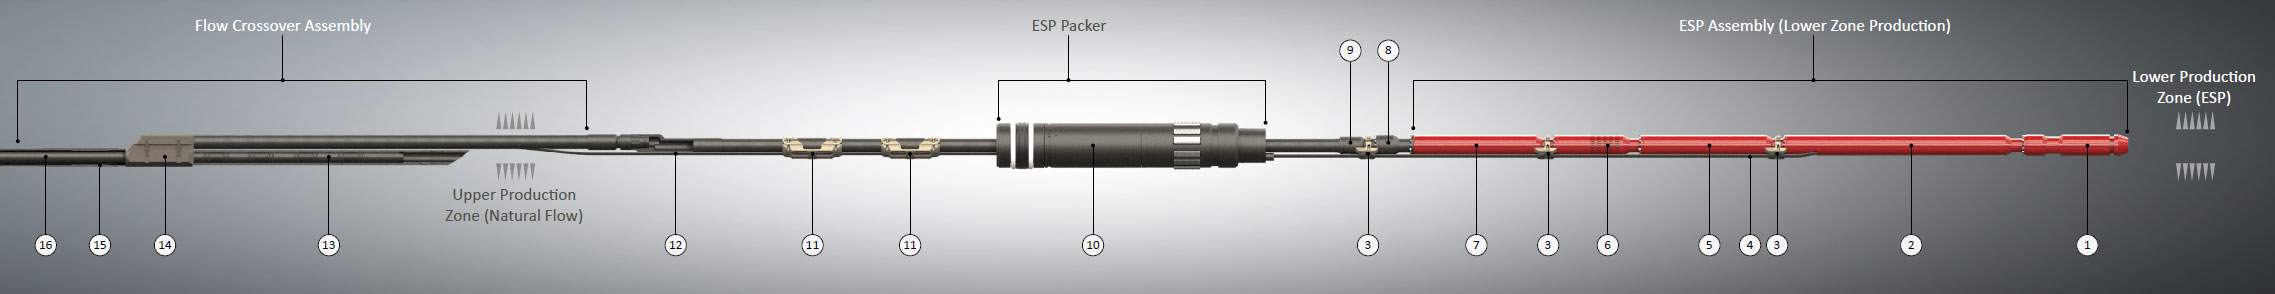 Upper Zone Natural Flow / Lower Zone ESP (ESP Packer)